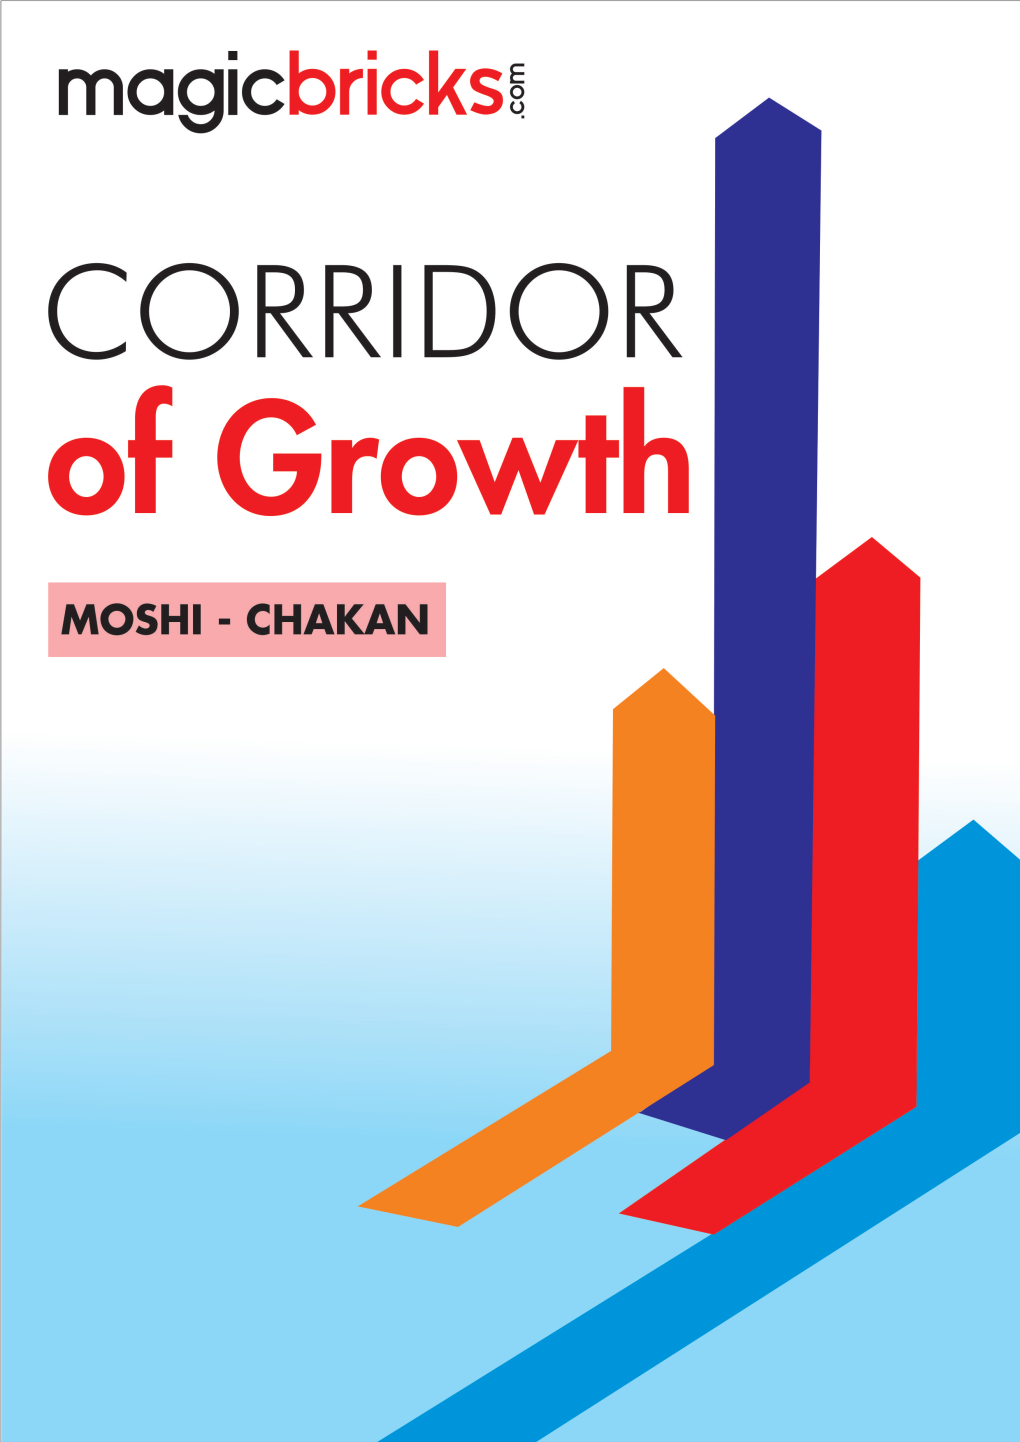 MOSHI - CHAKAN Corridor Description and Rating Areas Included: Moshi, Chakan and Chikali